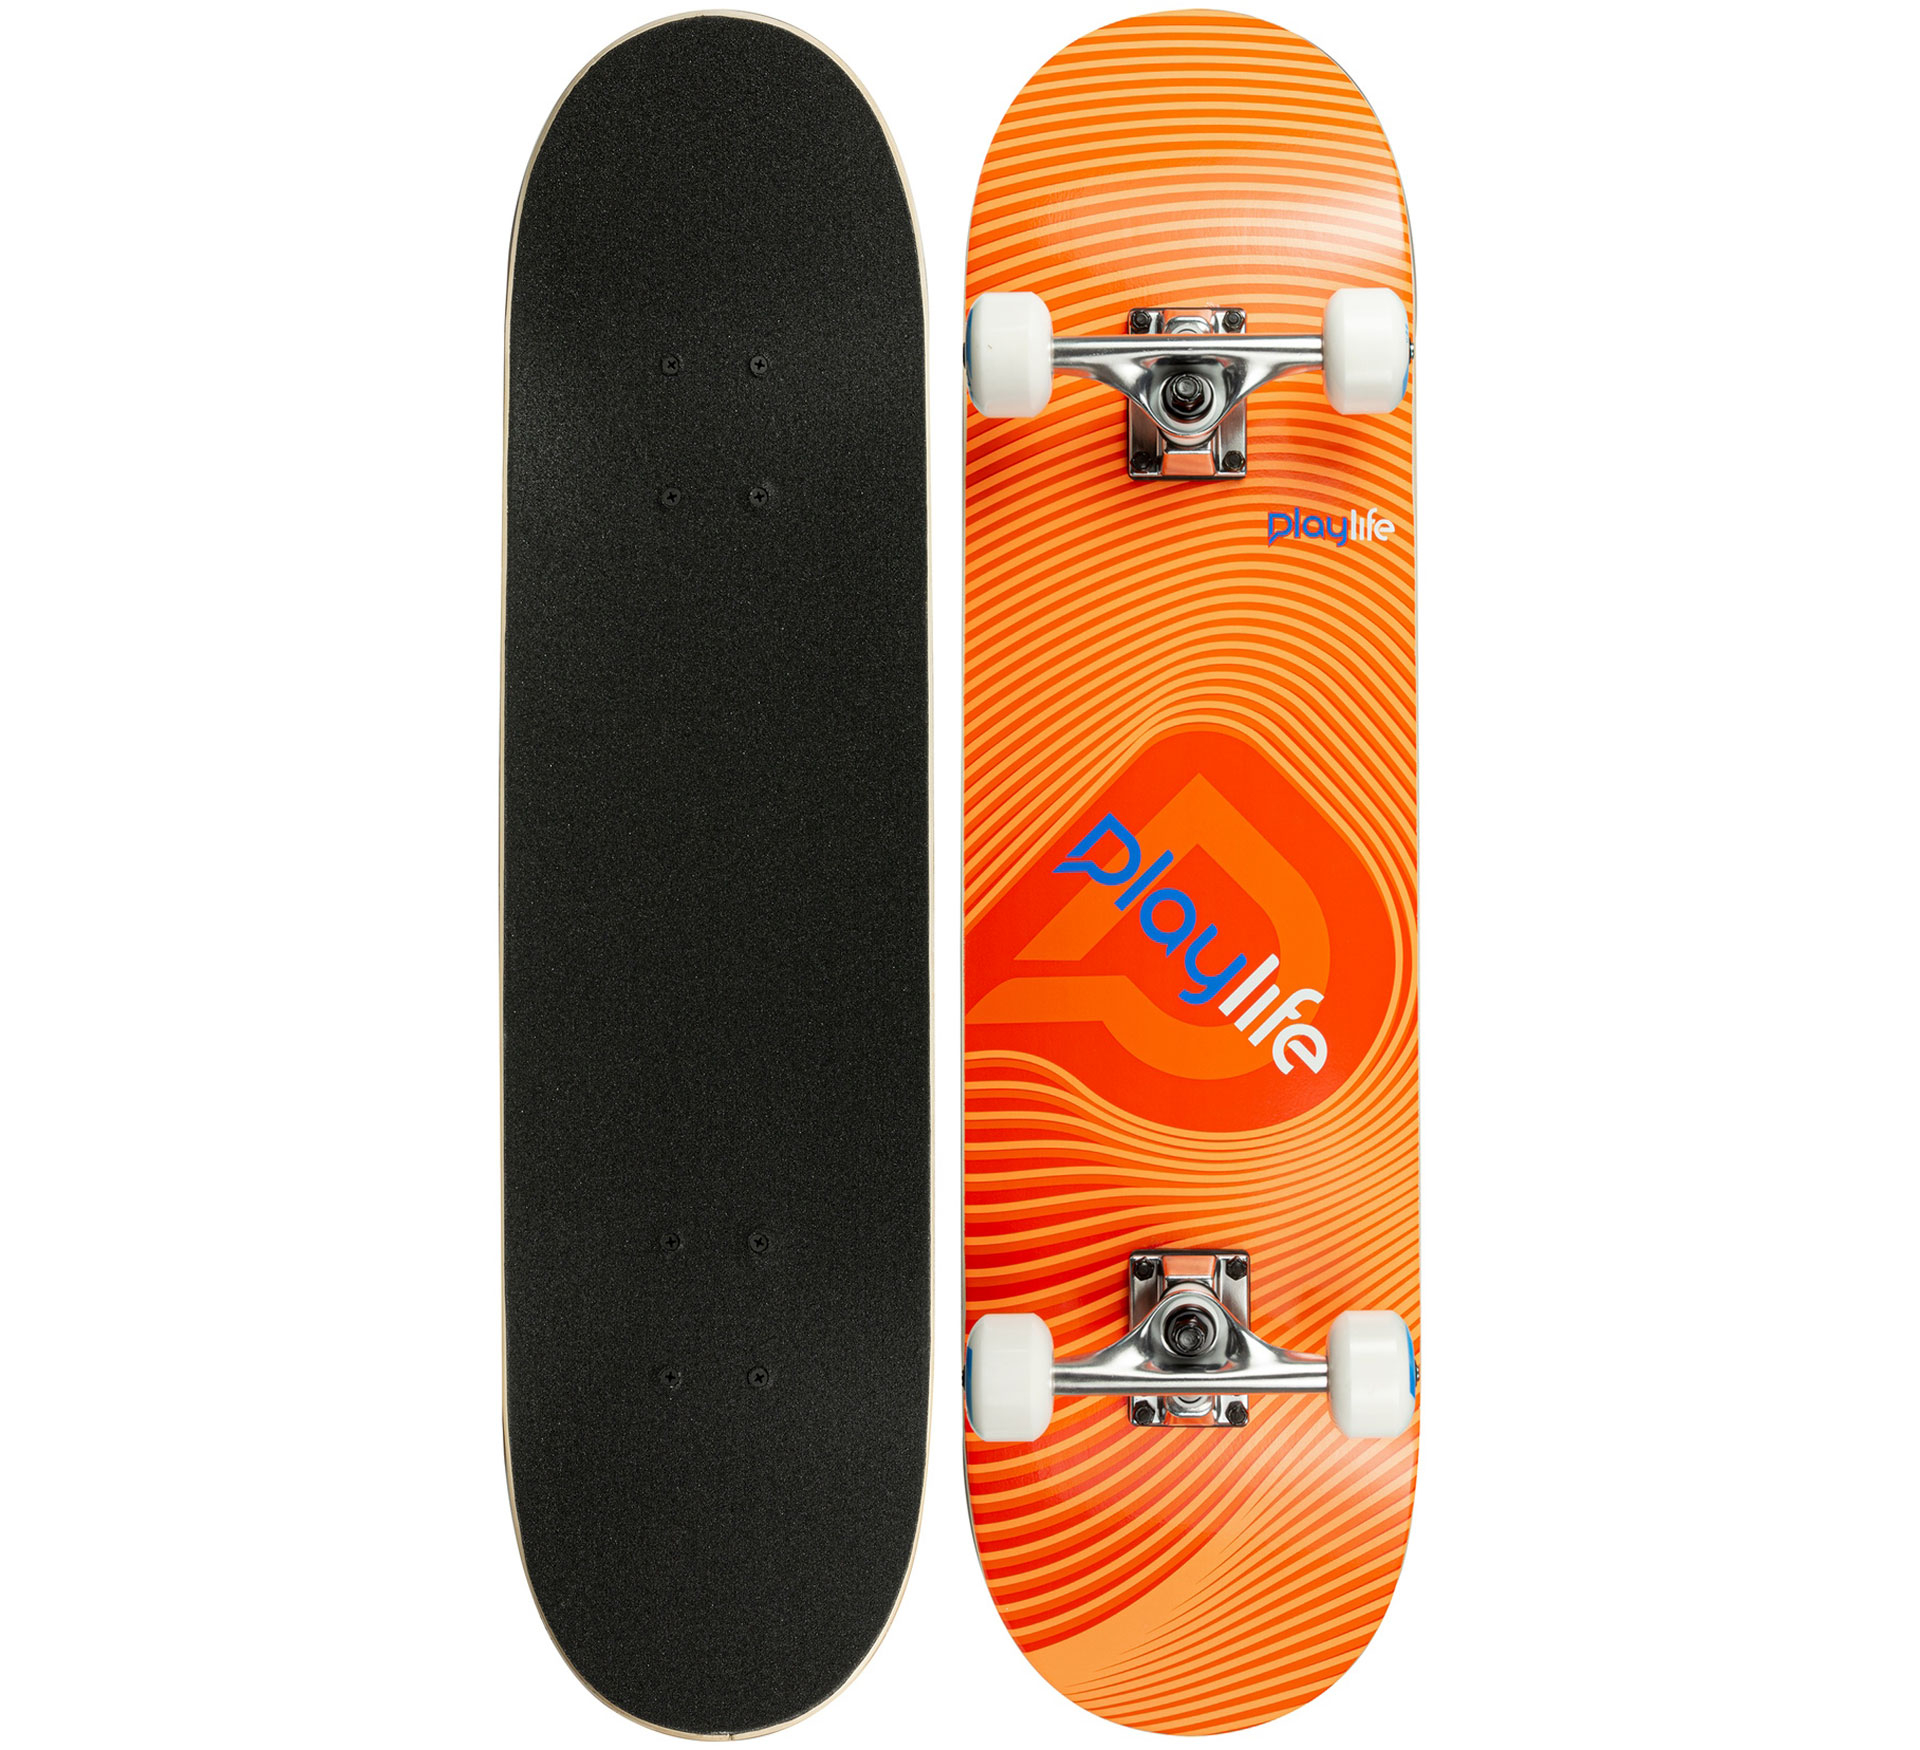 Gewaad wees gegroet neef Playlife Illusion Skateboard Skateboards -